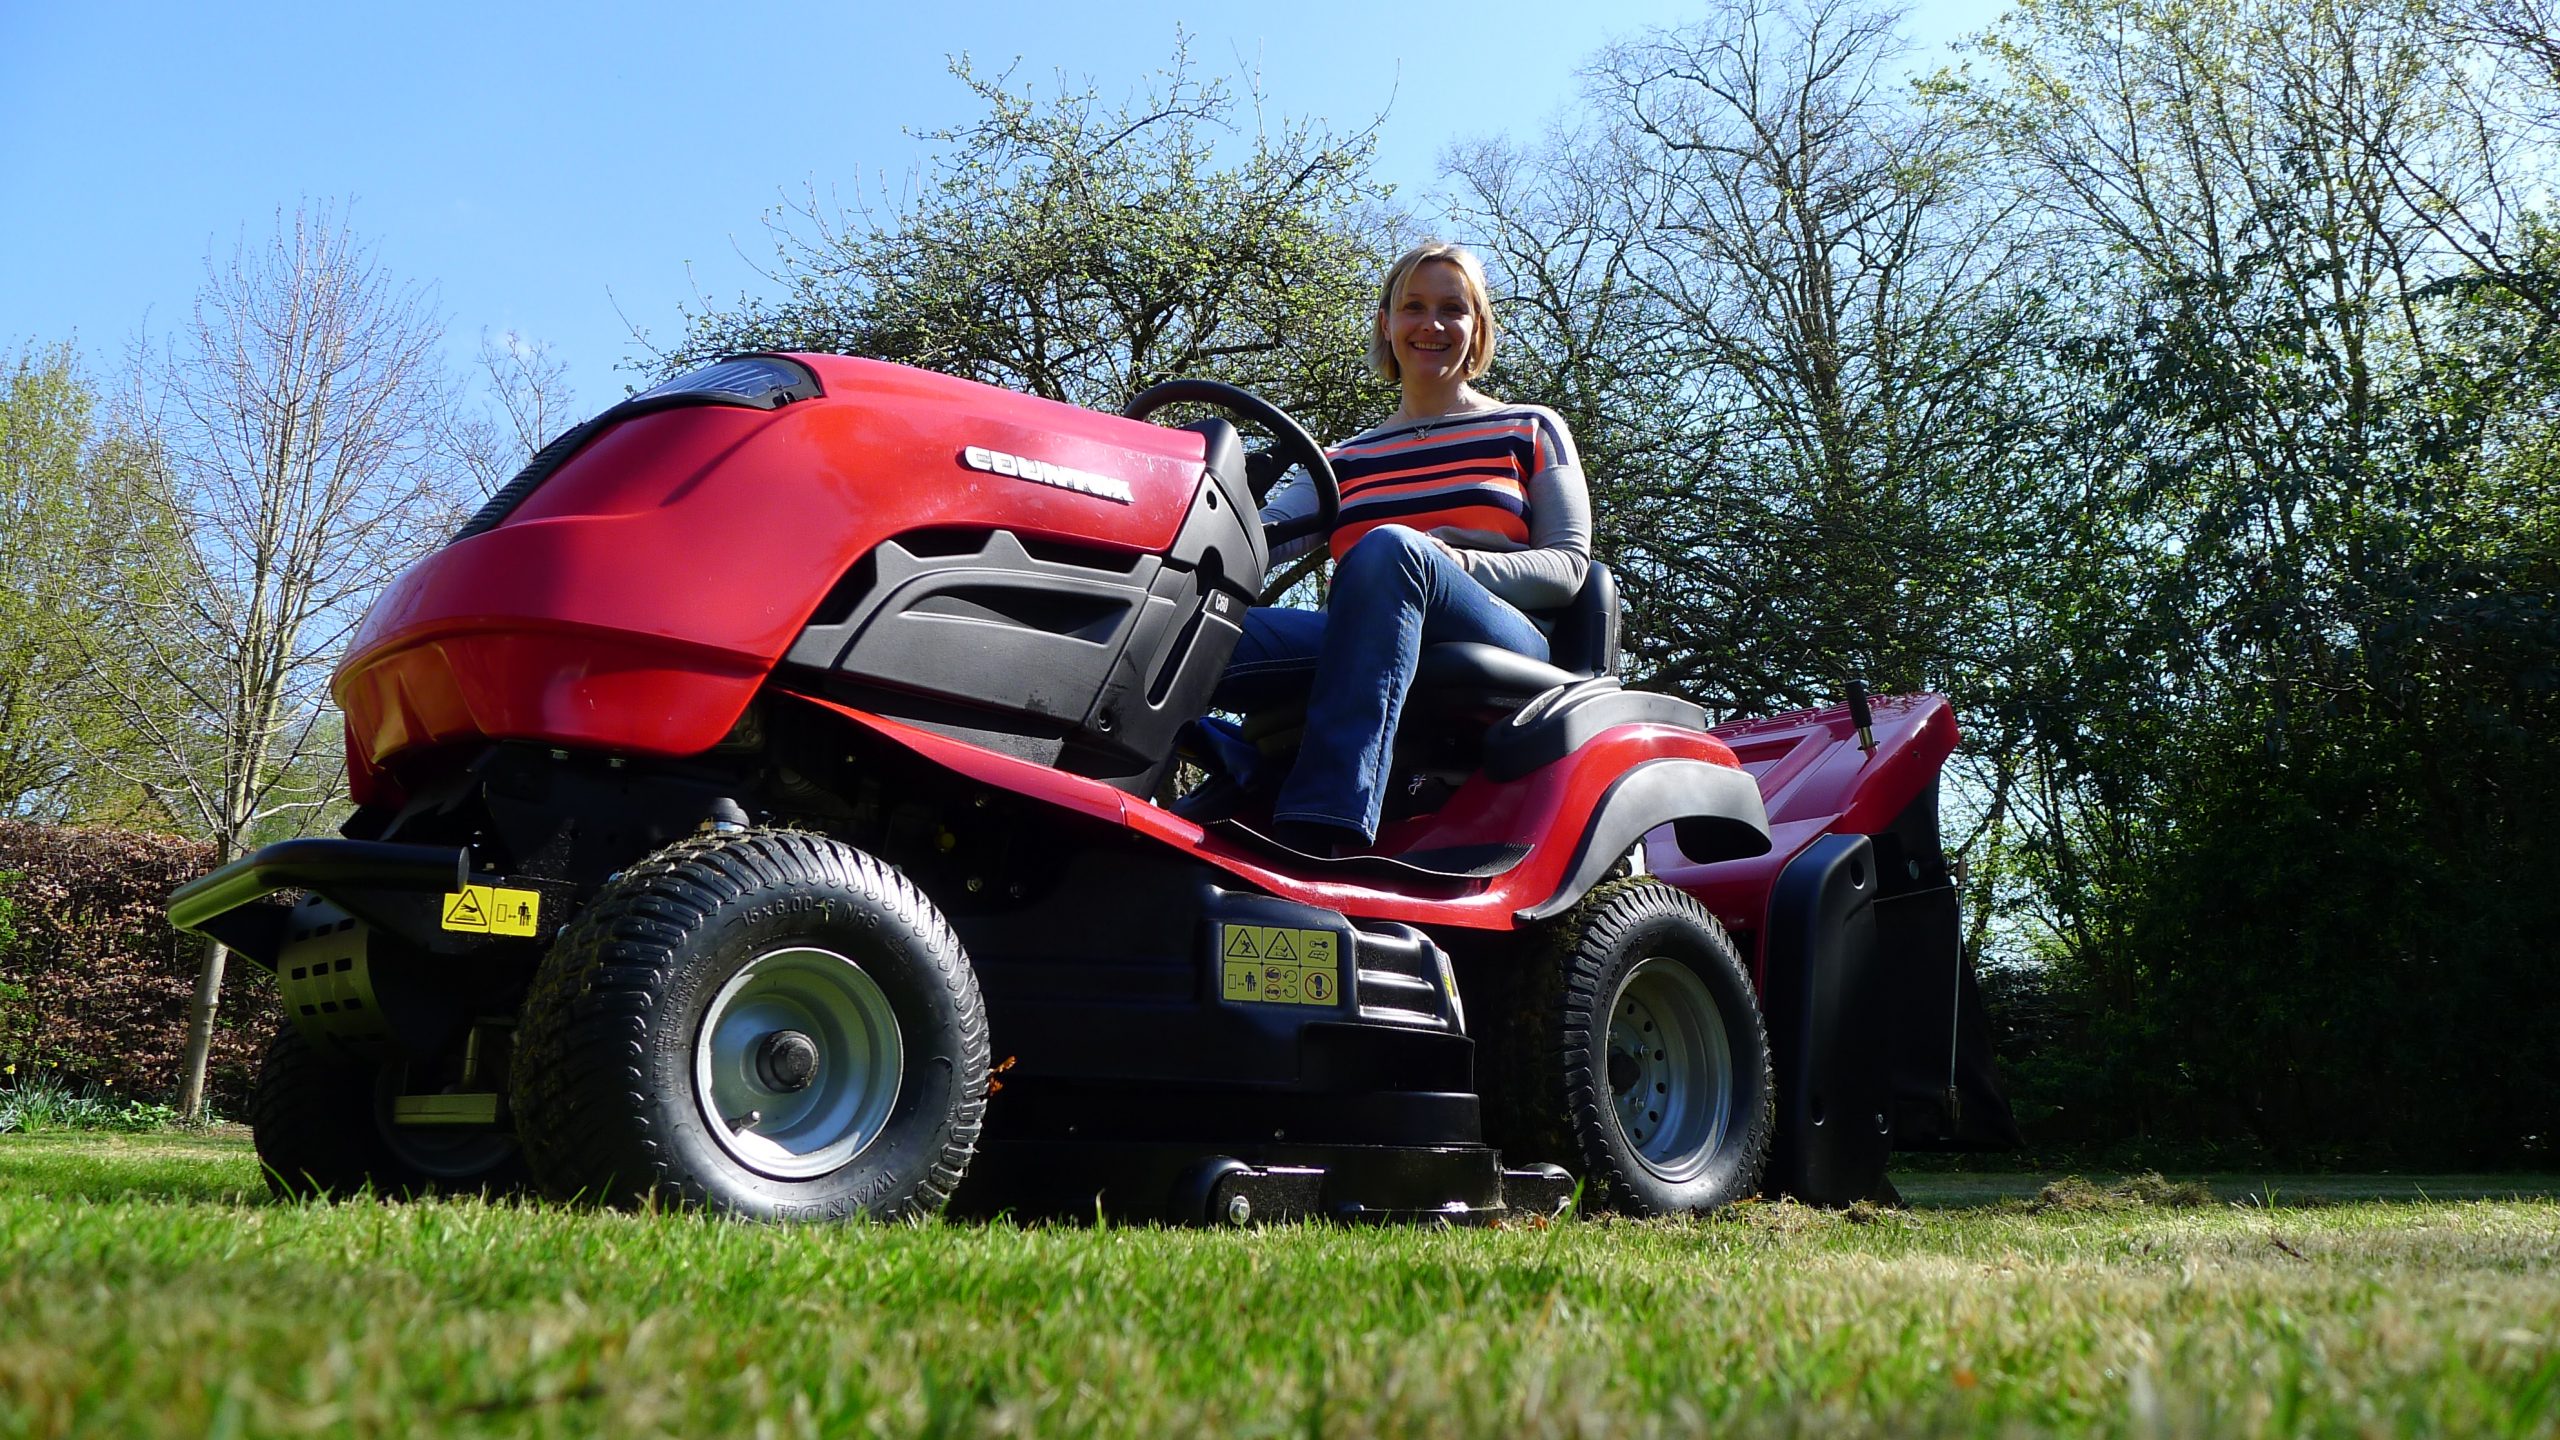 Countax lawn garden tractor riding mower